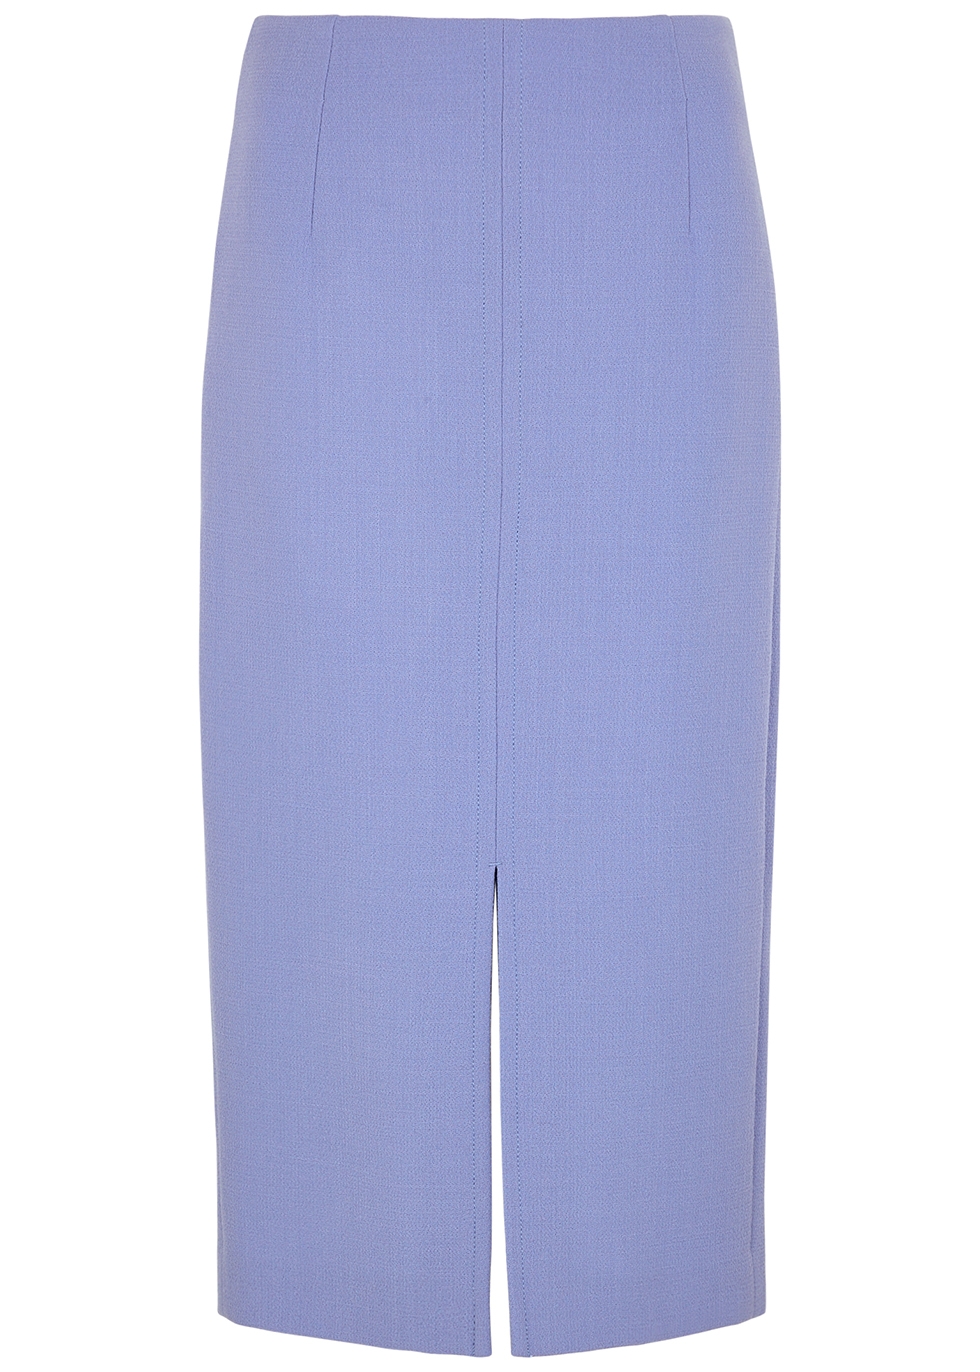 Moka blue wool-crepe pencil skirt